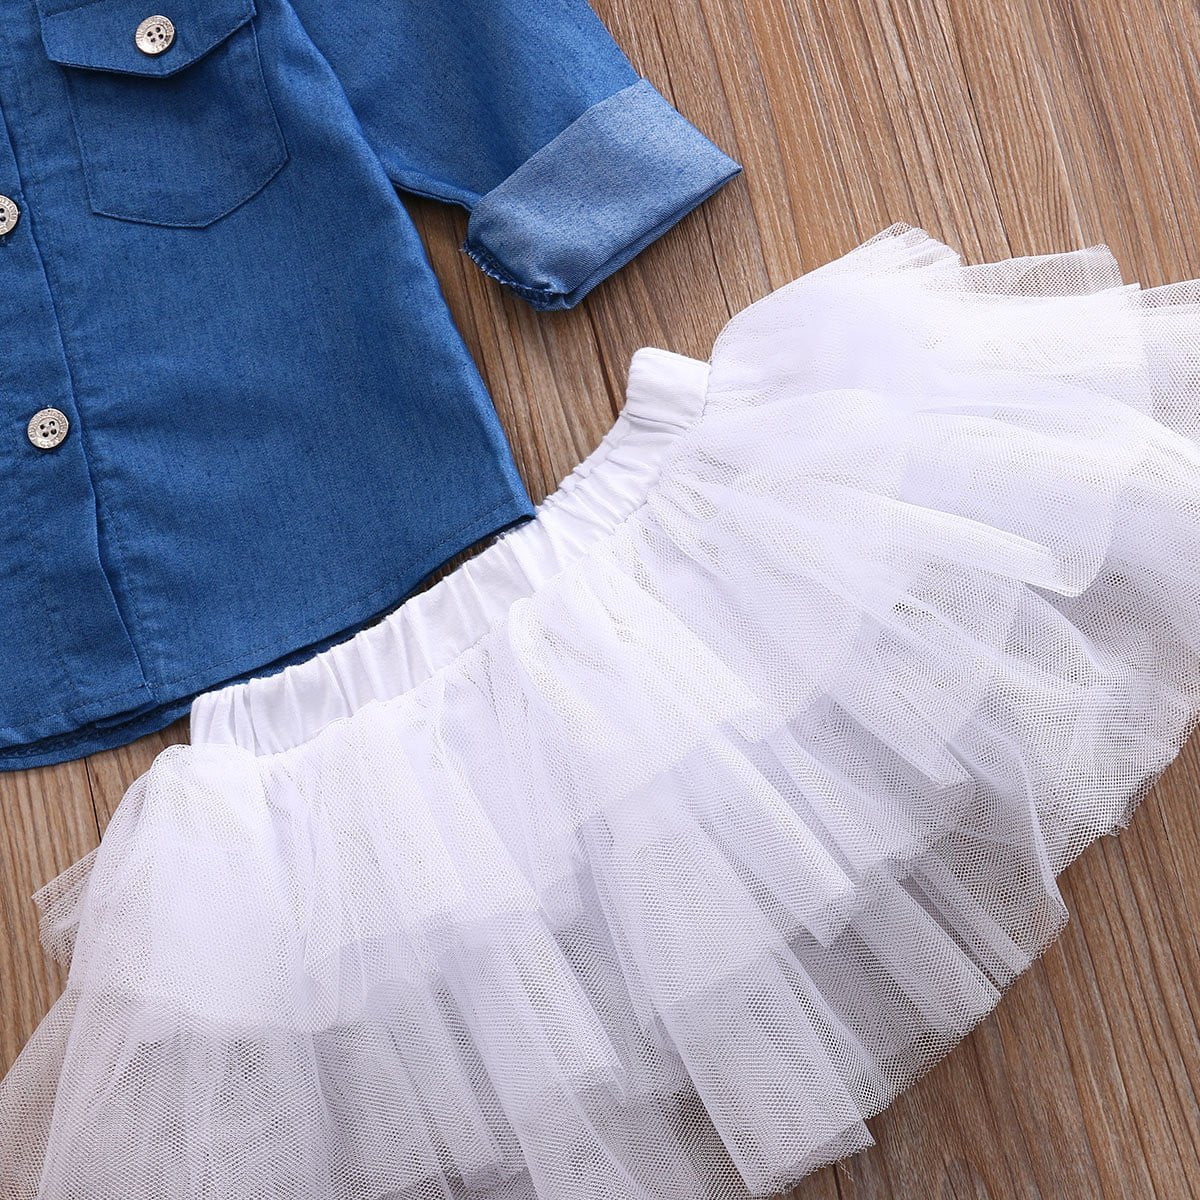 0-5T Babies Girl Summer Clothing Set Baby Girls Denim Shirt Top +Tutu Skirts+Headband 3pcs Outfits Sets - TRIPLE AAA Fashion Collection